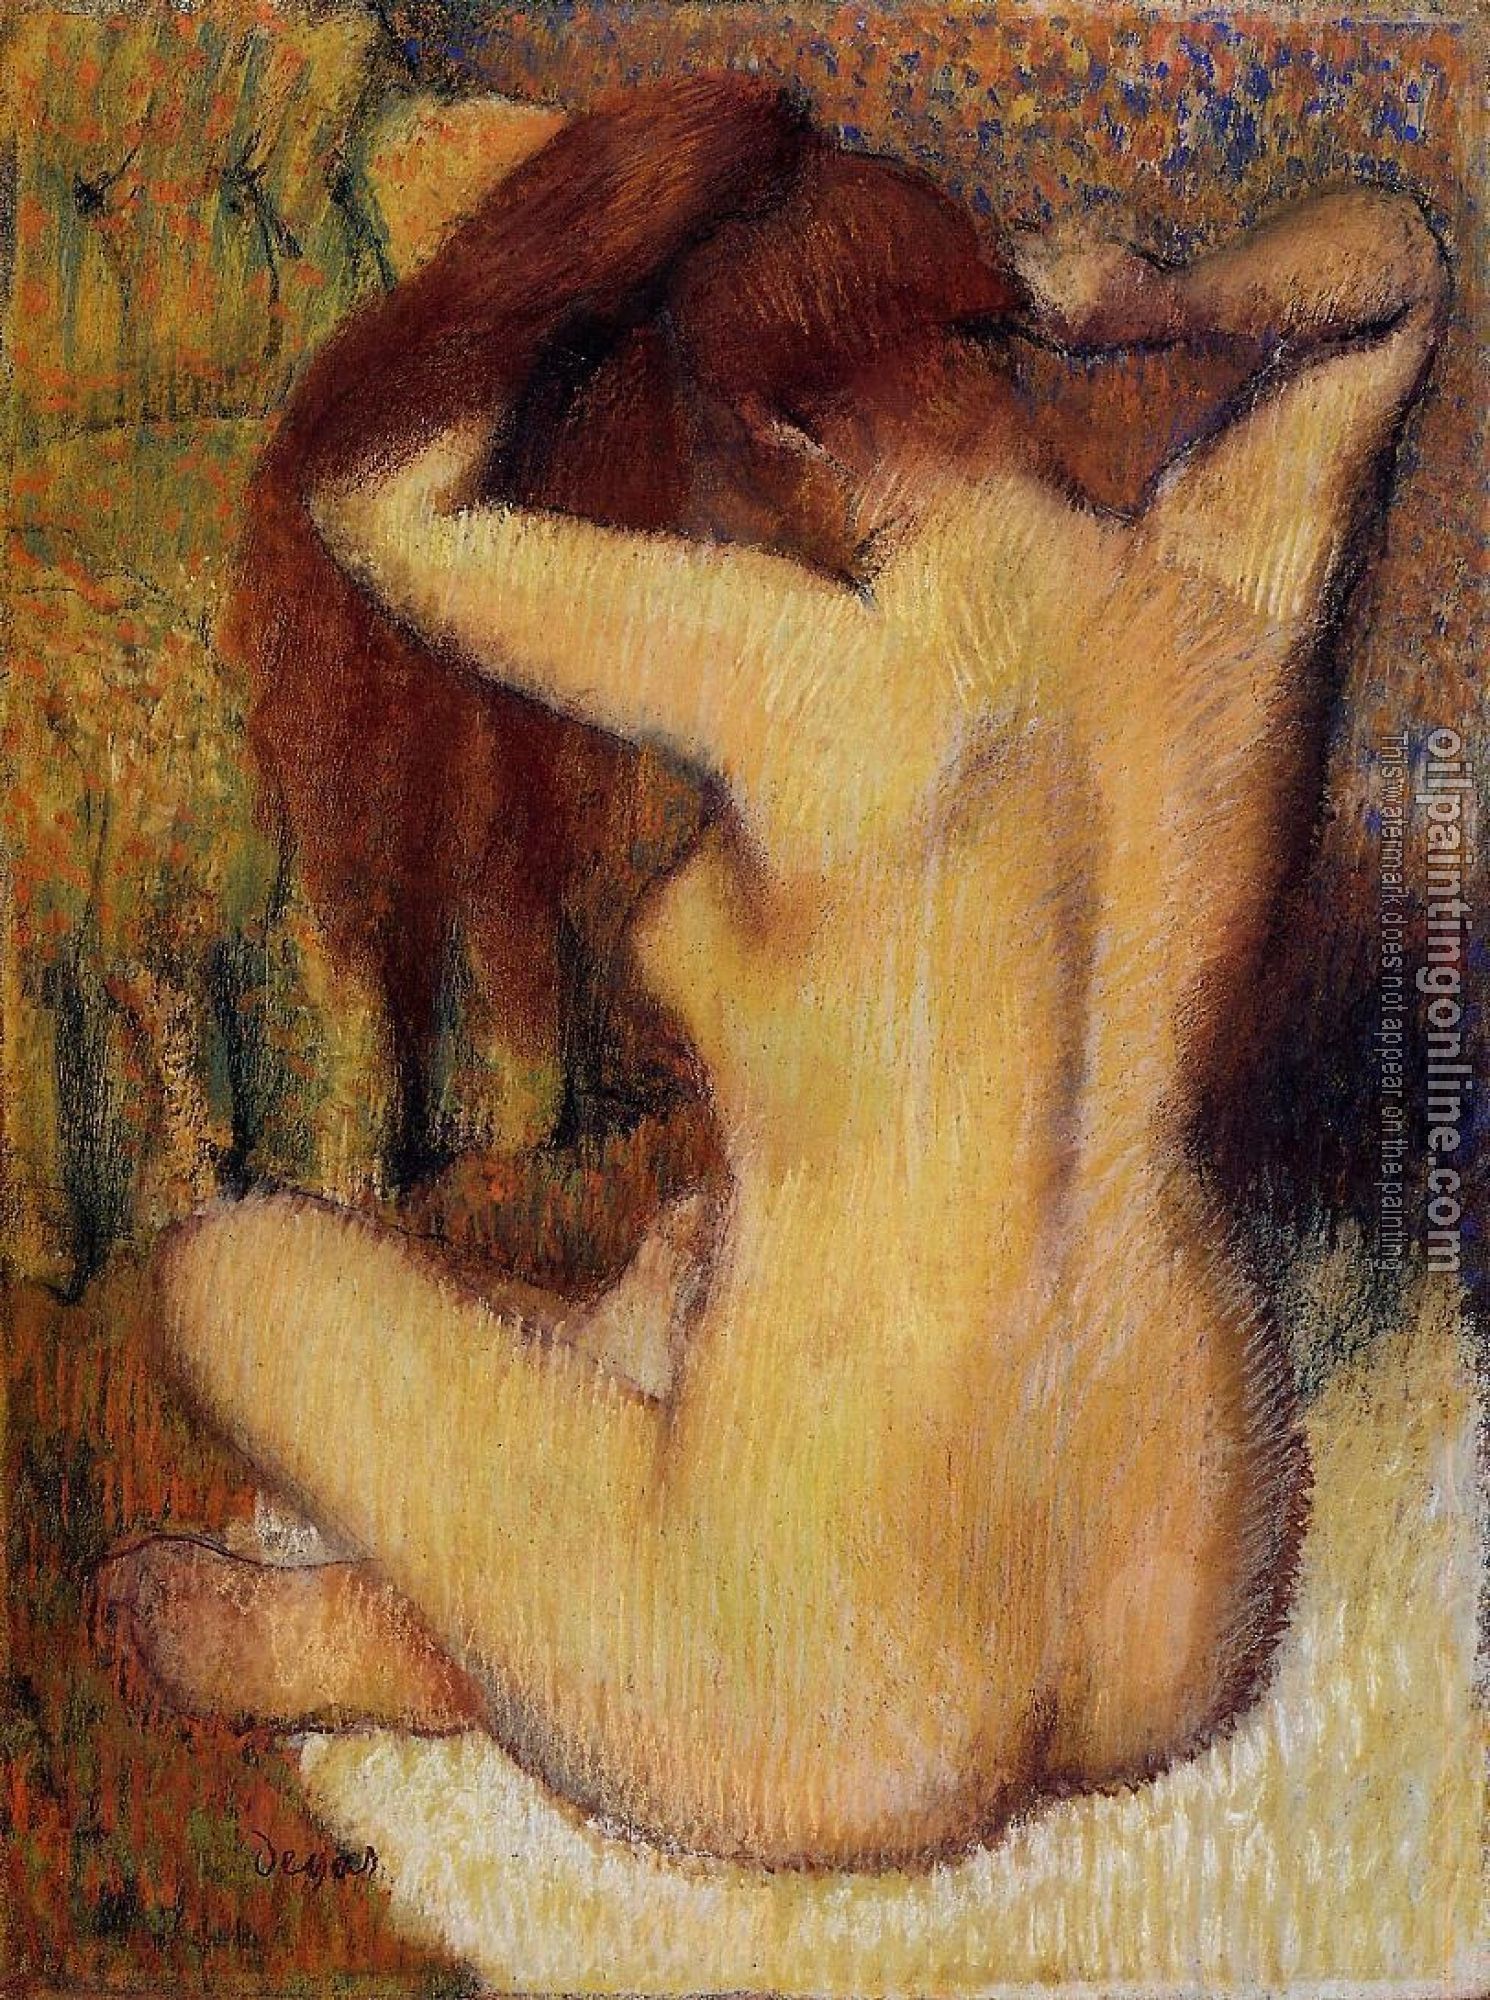 Degas, Edgar - Woman Combing Her Hair